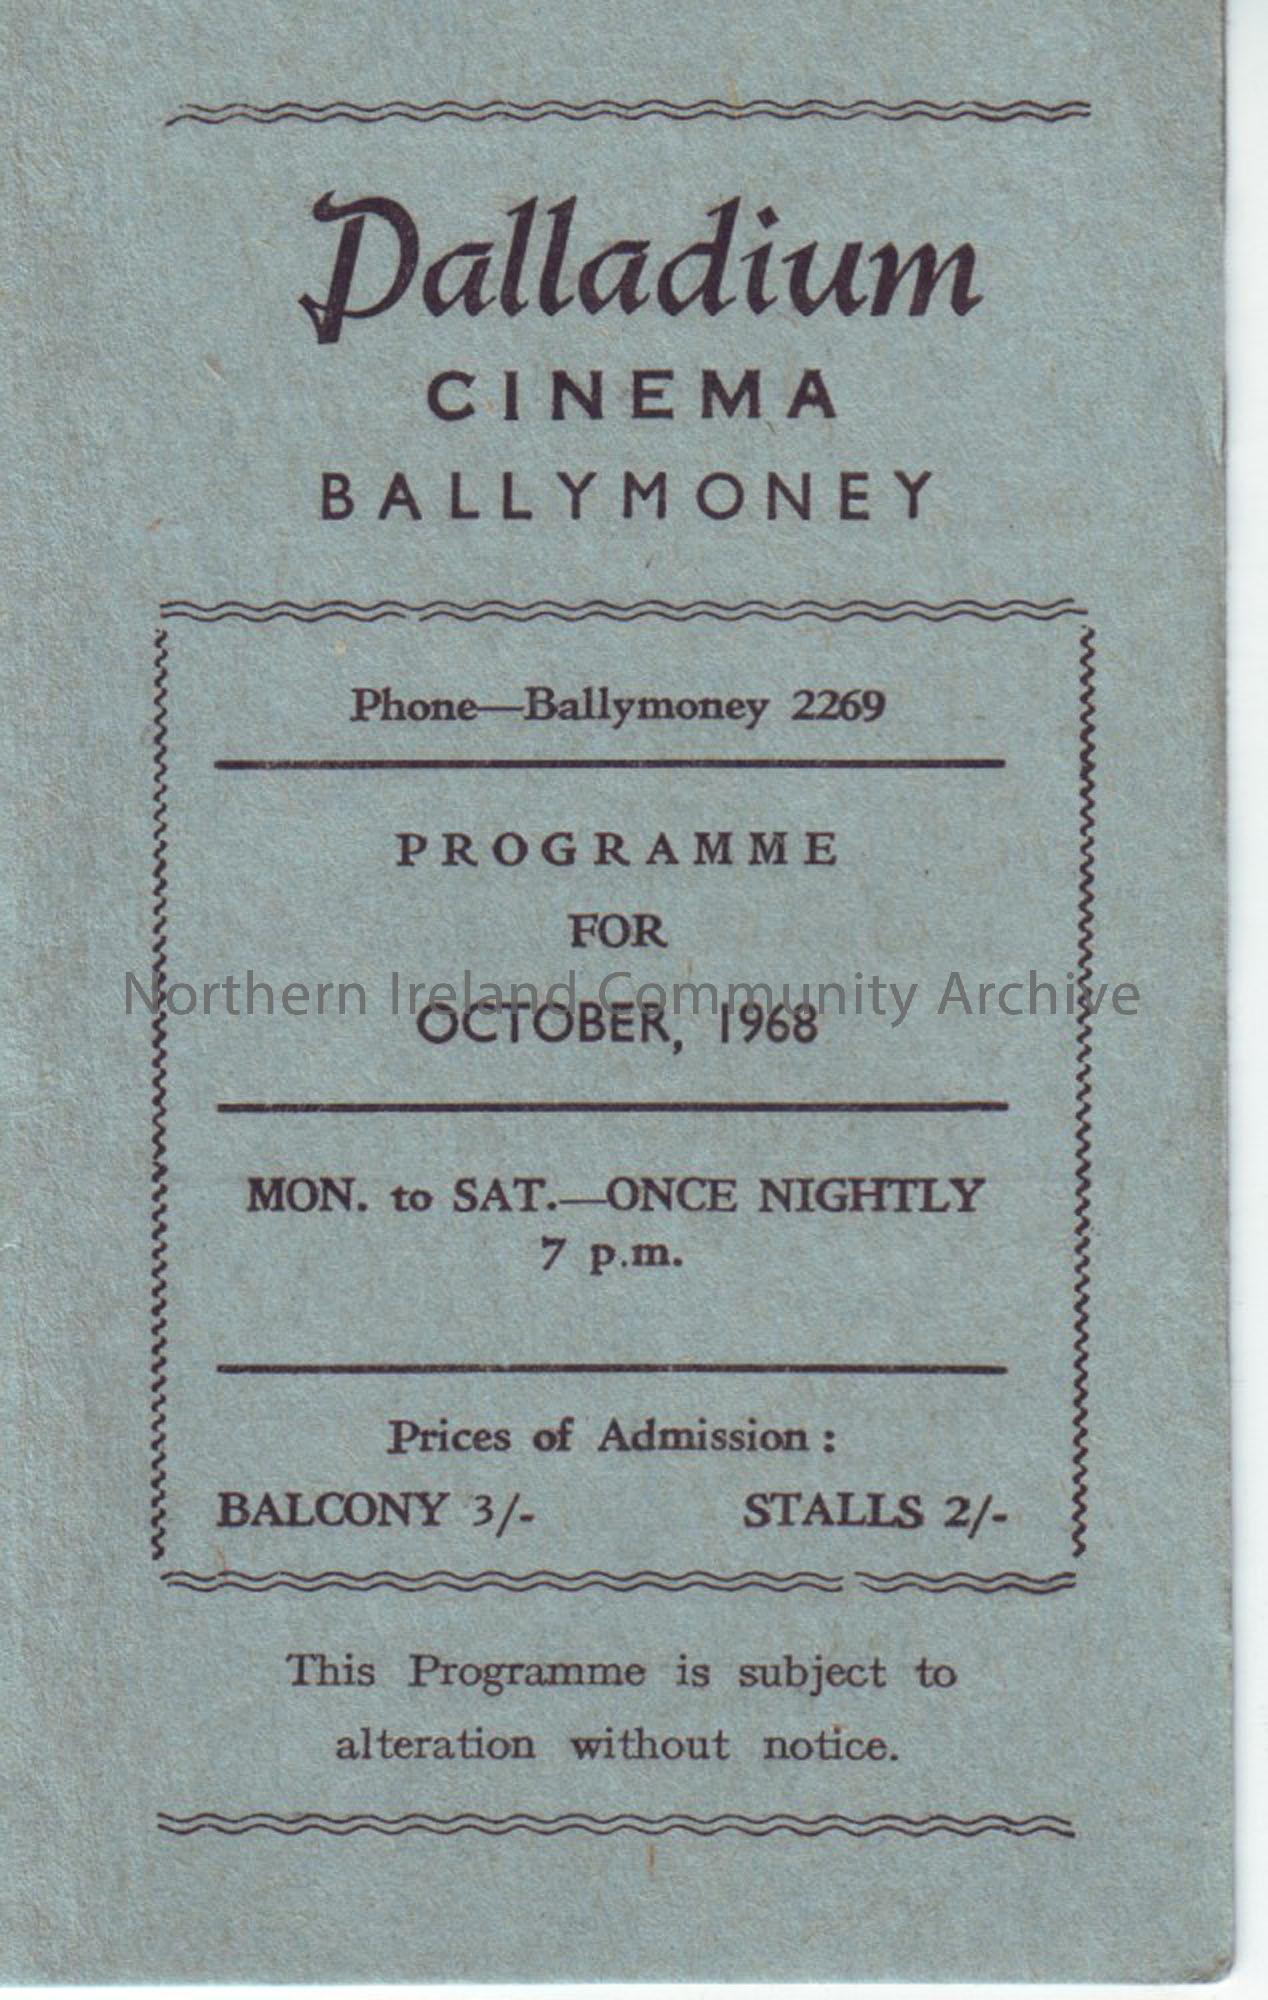 green monthly programme for Ballymoney Palladium cinema- October 1968